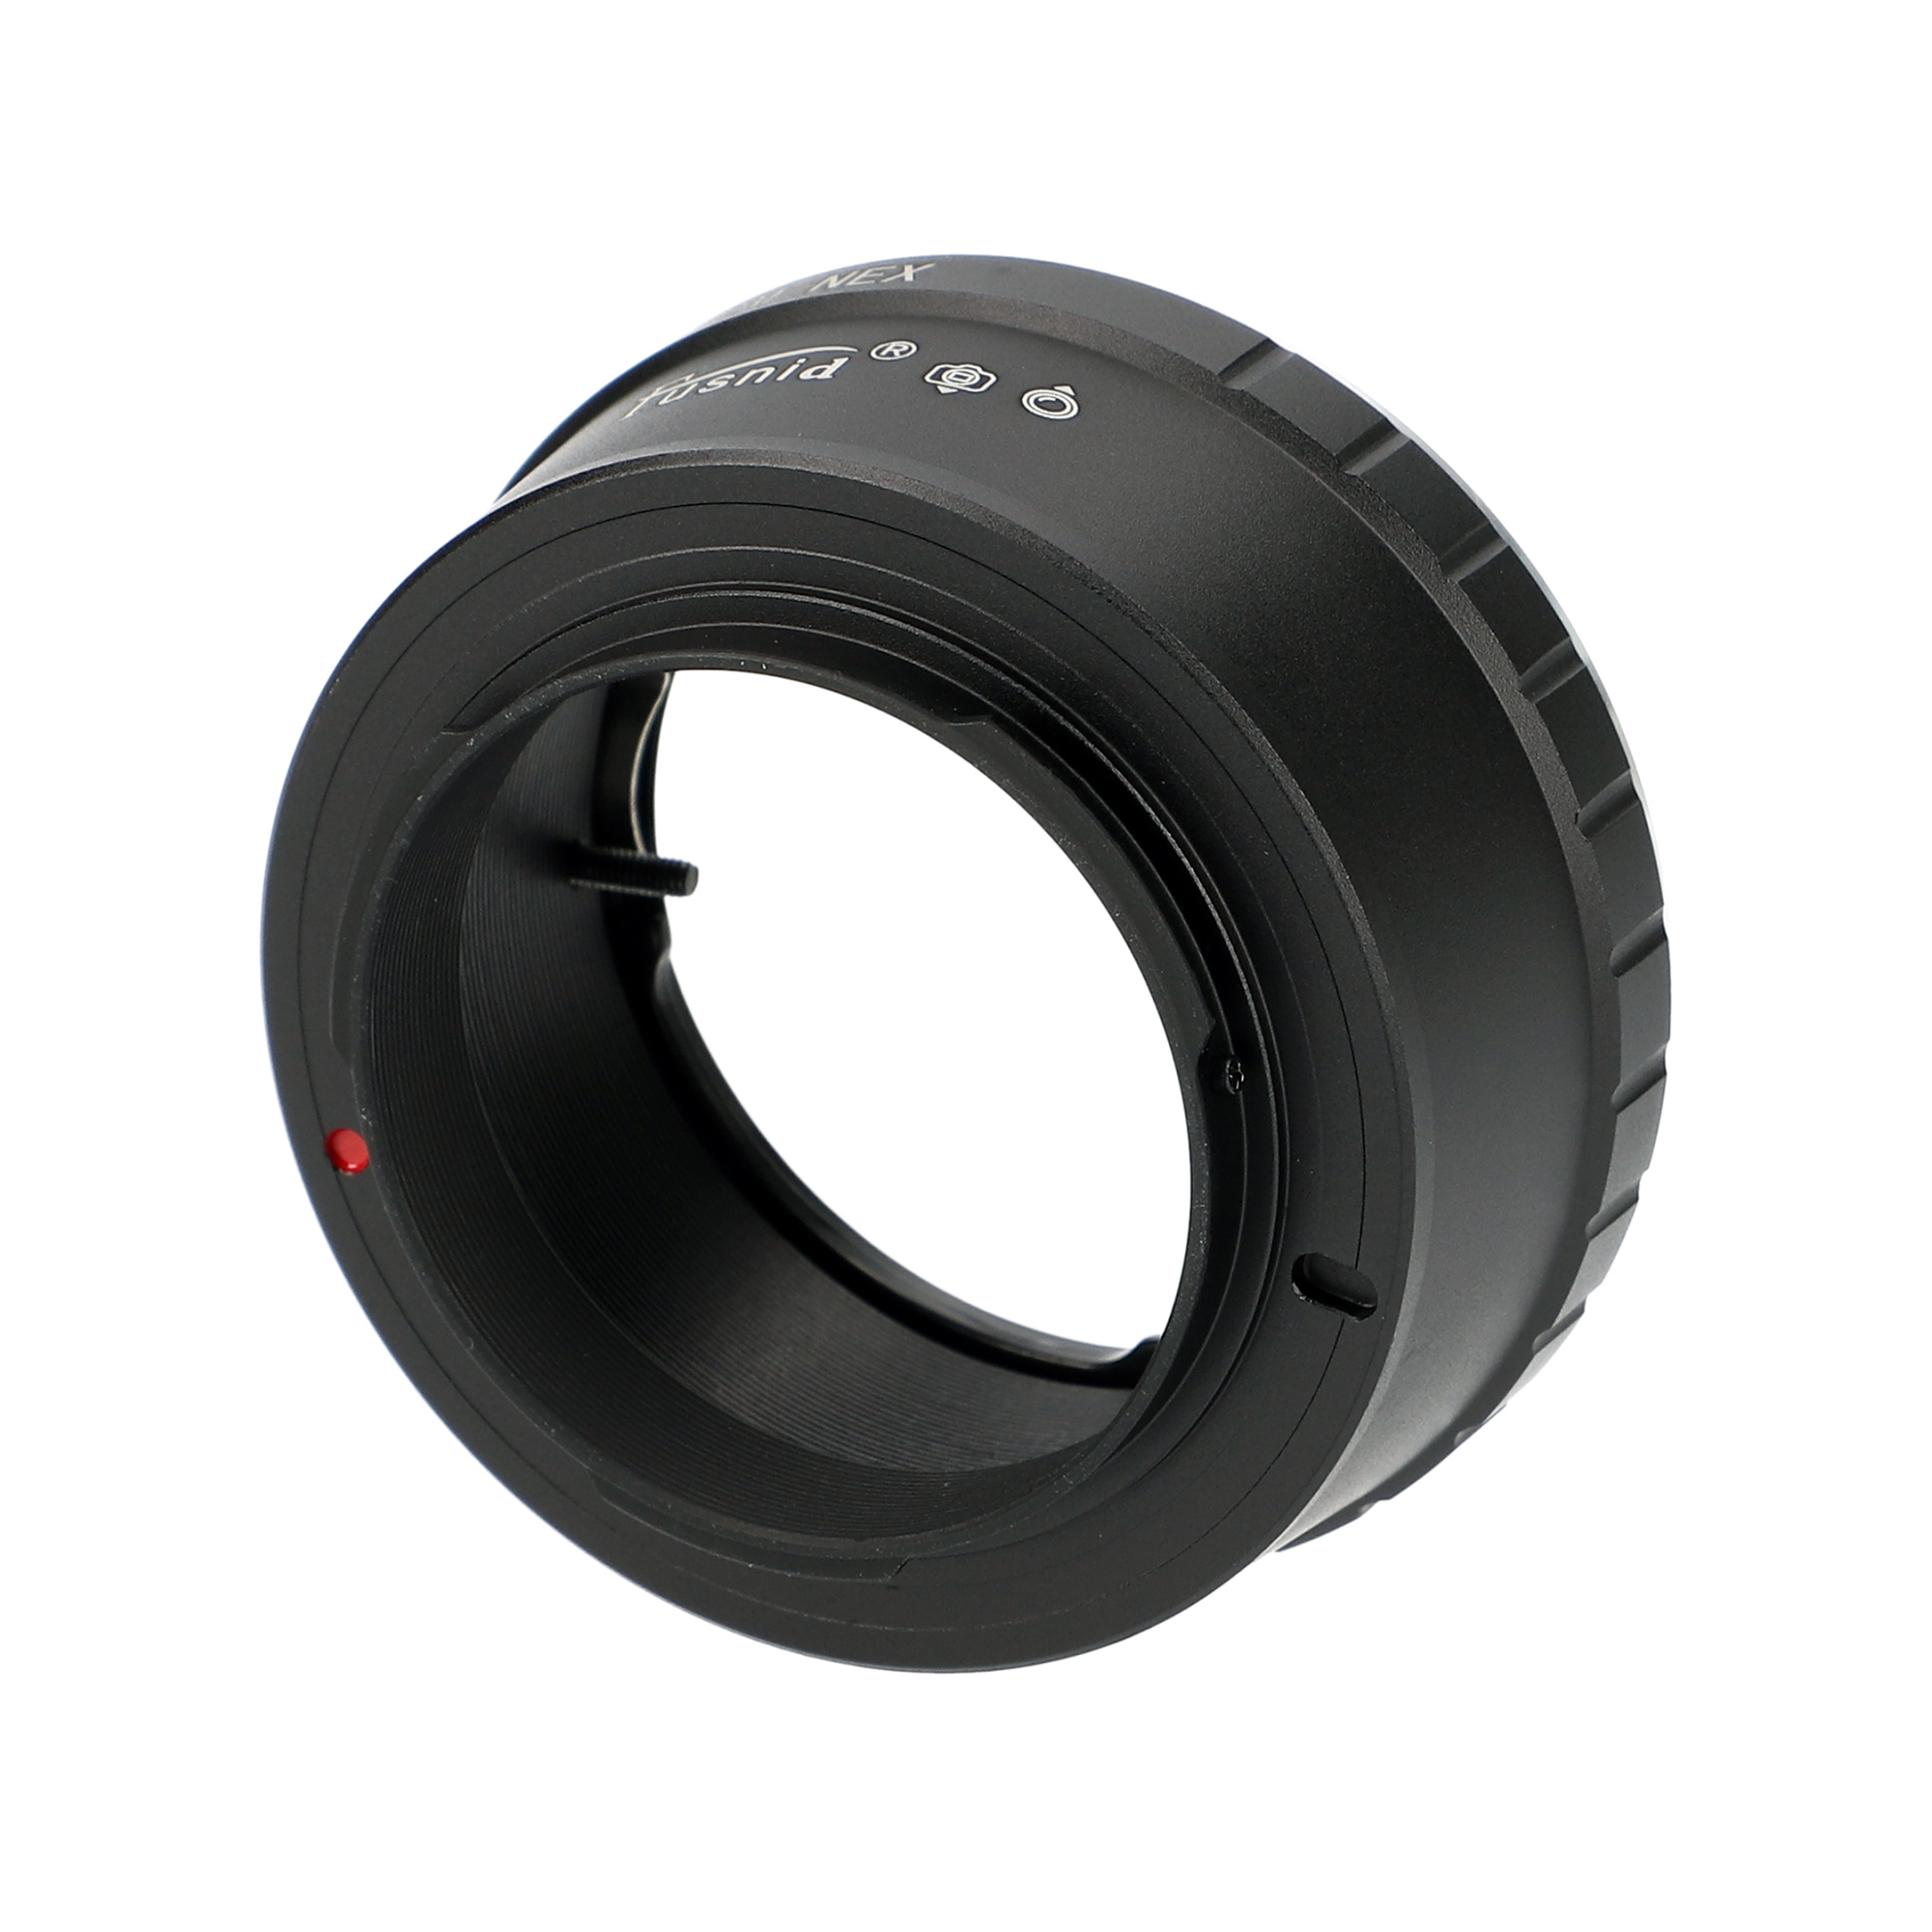 Objektivadapter für Olympus OM Objektive an Sony E-Mount Kameras